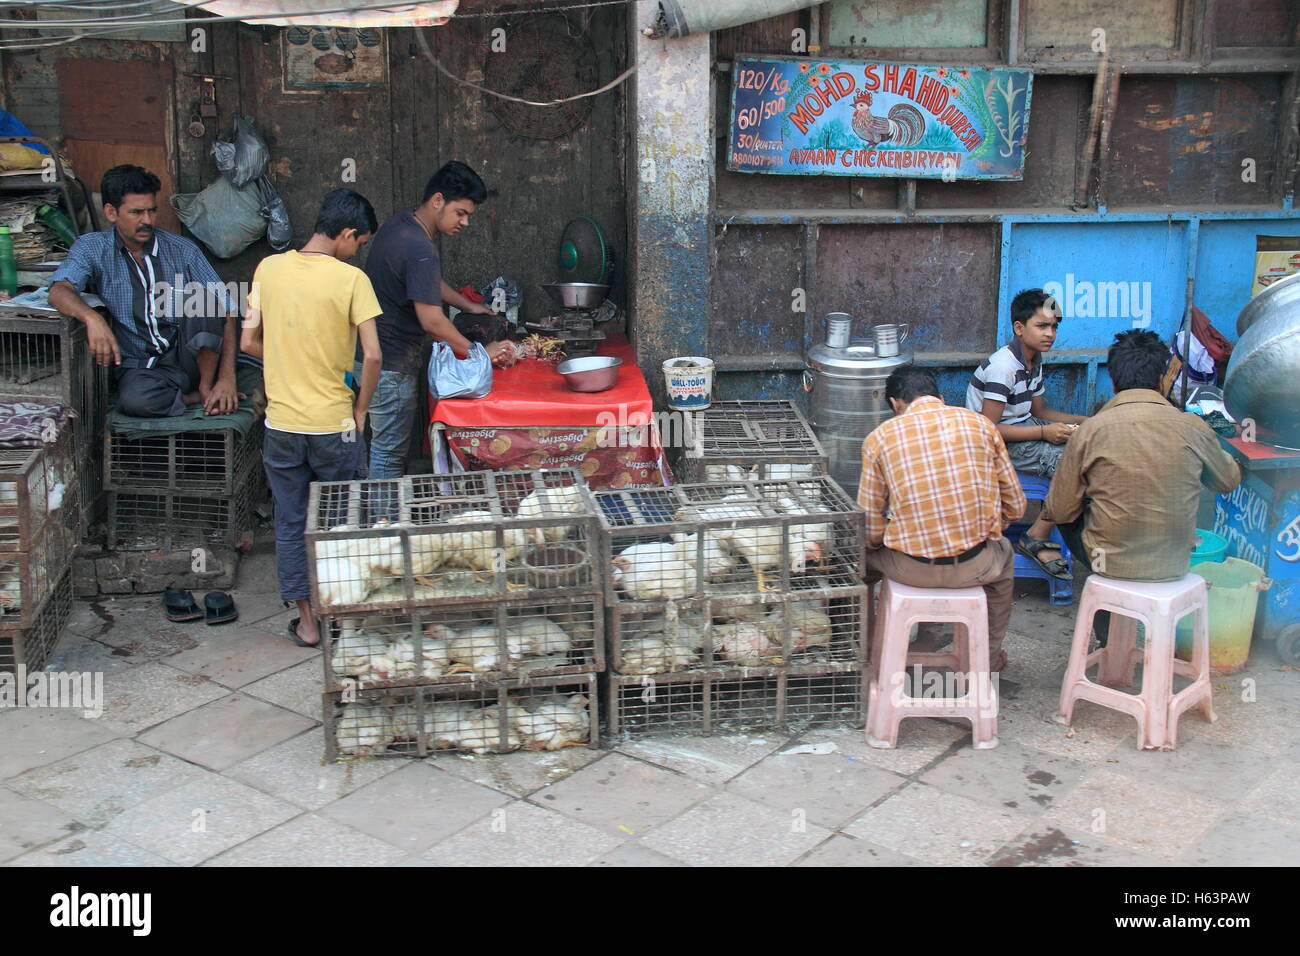 Chicken Biryani street food stall, Old Delhi, India, Indian